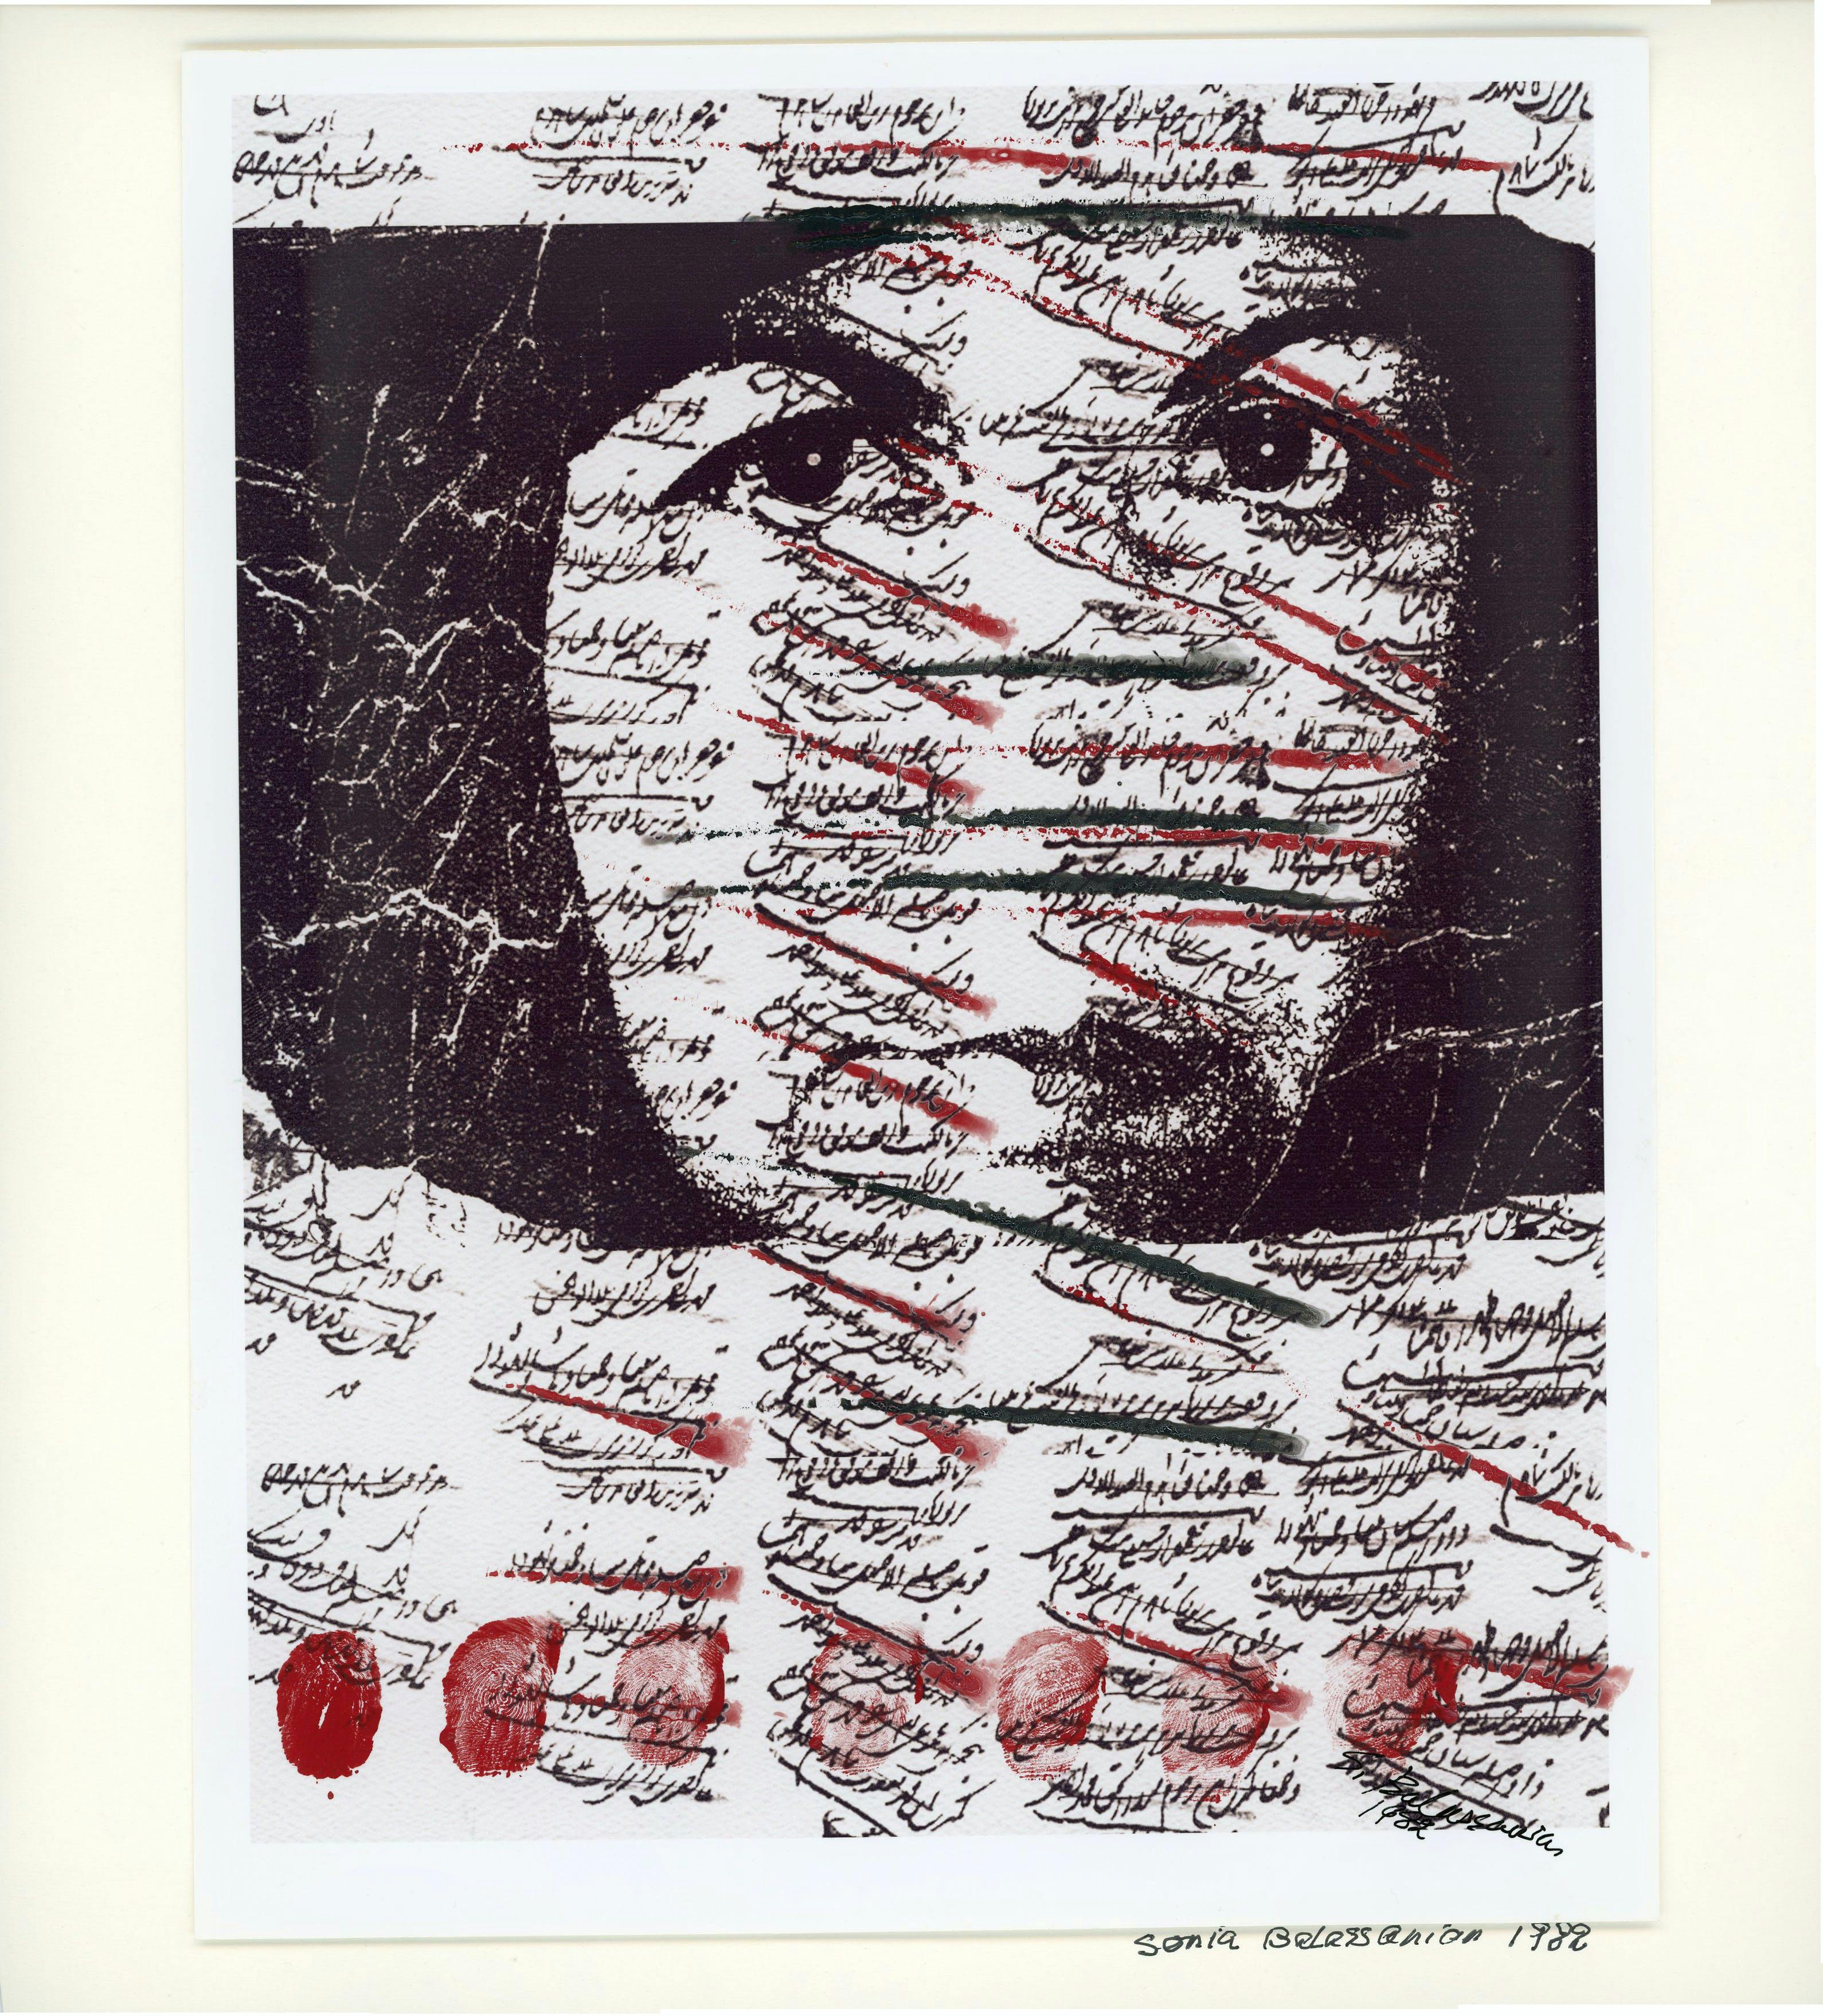 Sonia Balassanian, Untitled (Self Portrait) - 04, 1982